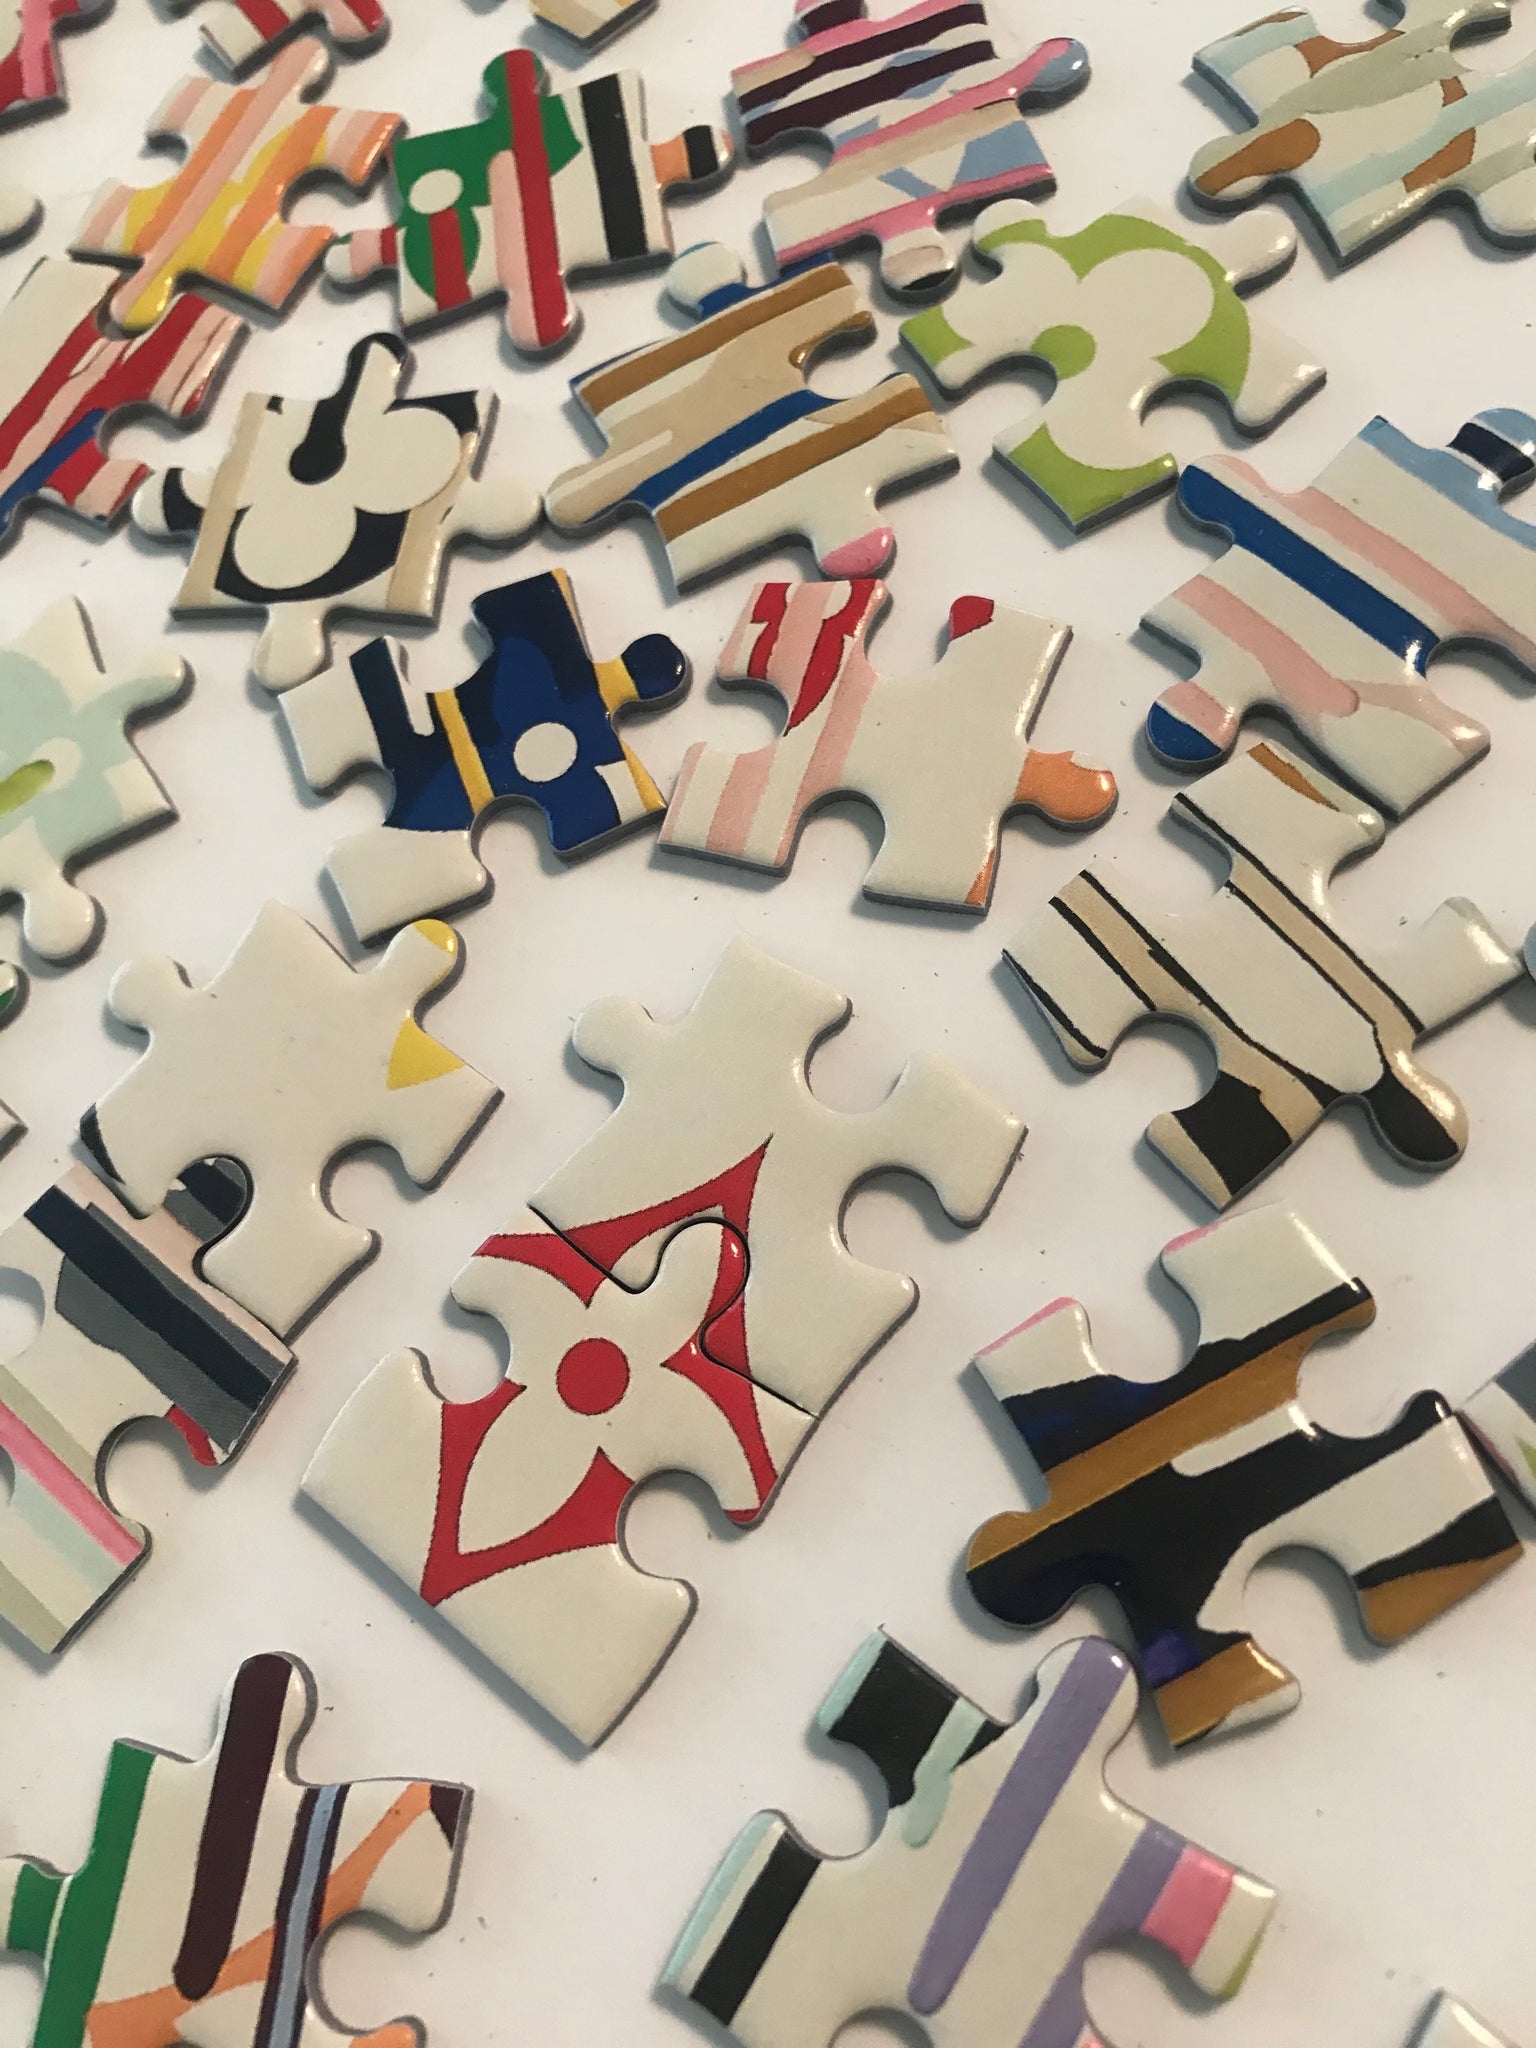 Zevs Jigsaw 2020 Collector Edition Puzzle - Artxpuzzles – Art x Puzzles  Puzzles with Purpose